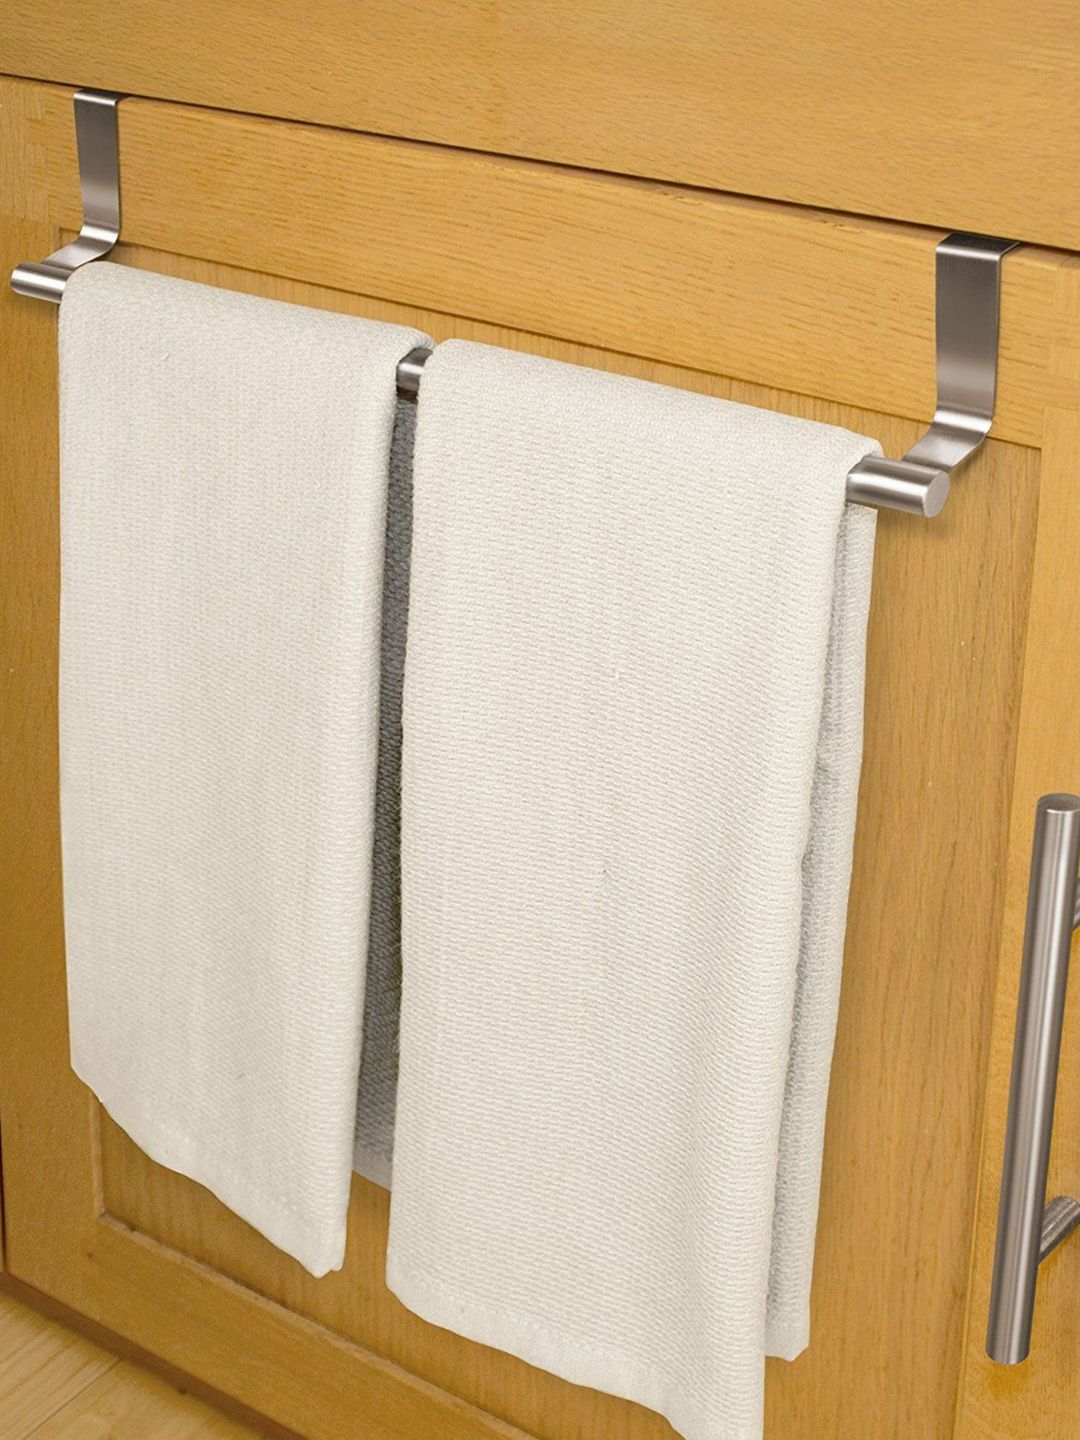 INTERDESIGN Steel-Toned Stainless Steel Towel Holder Price in India